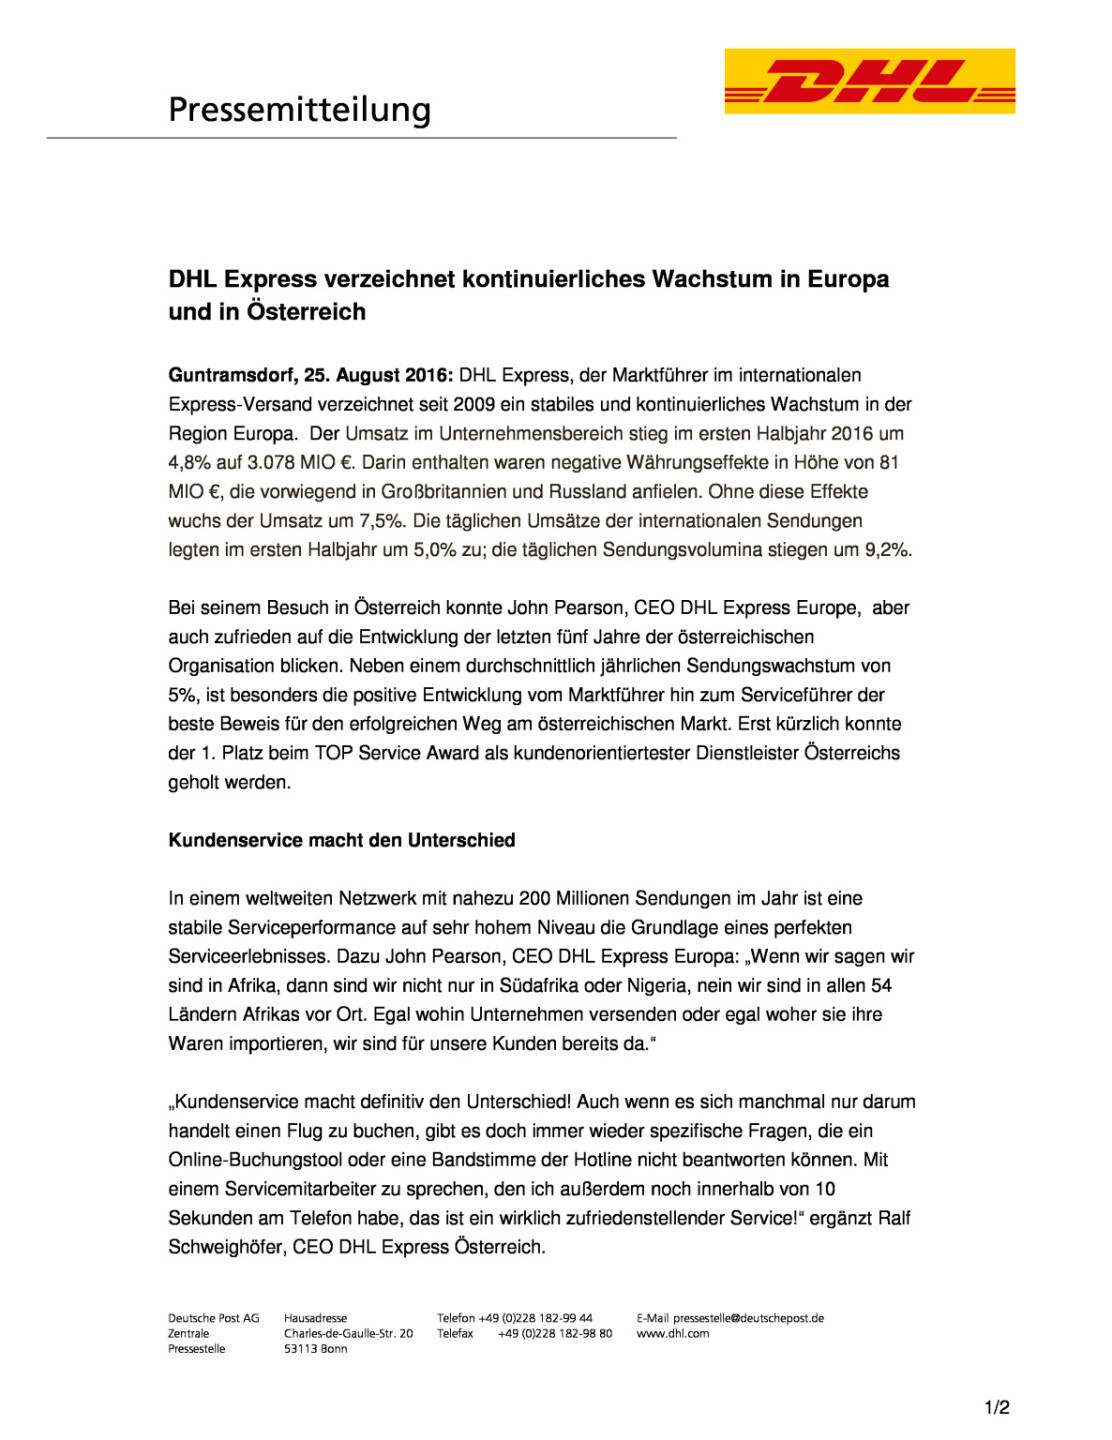 DHL Express: Entwicklung in Europa und Österreich , Seite 1/2, komplettes Dokument unter http://boerse-social.com/static/uploads/file_1689_dhl_express_entwicklung_in_europa_und_osterreich.pdf